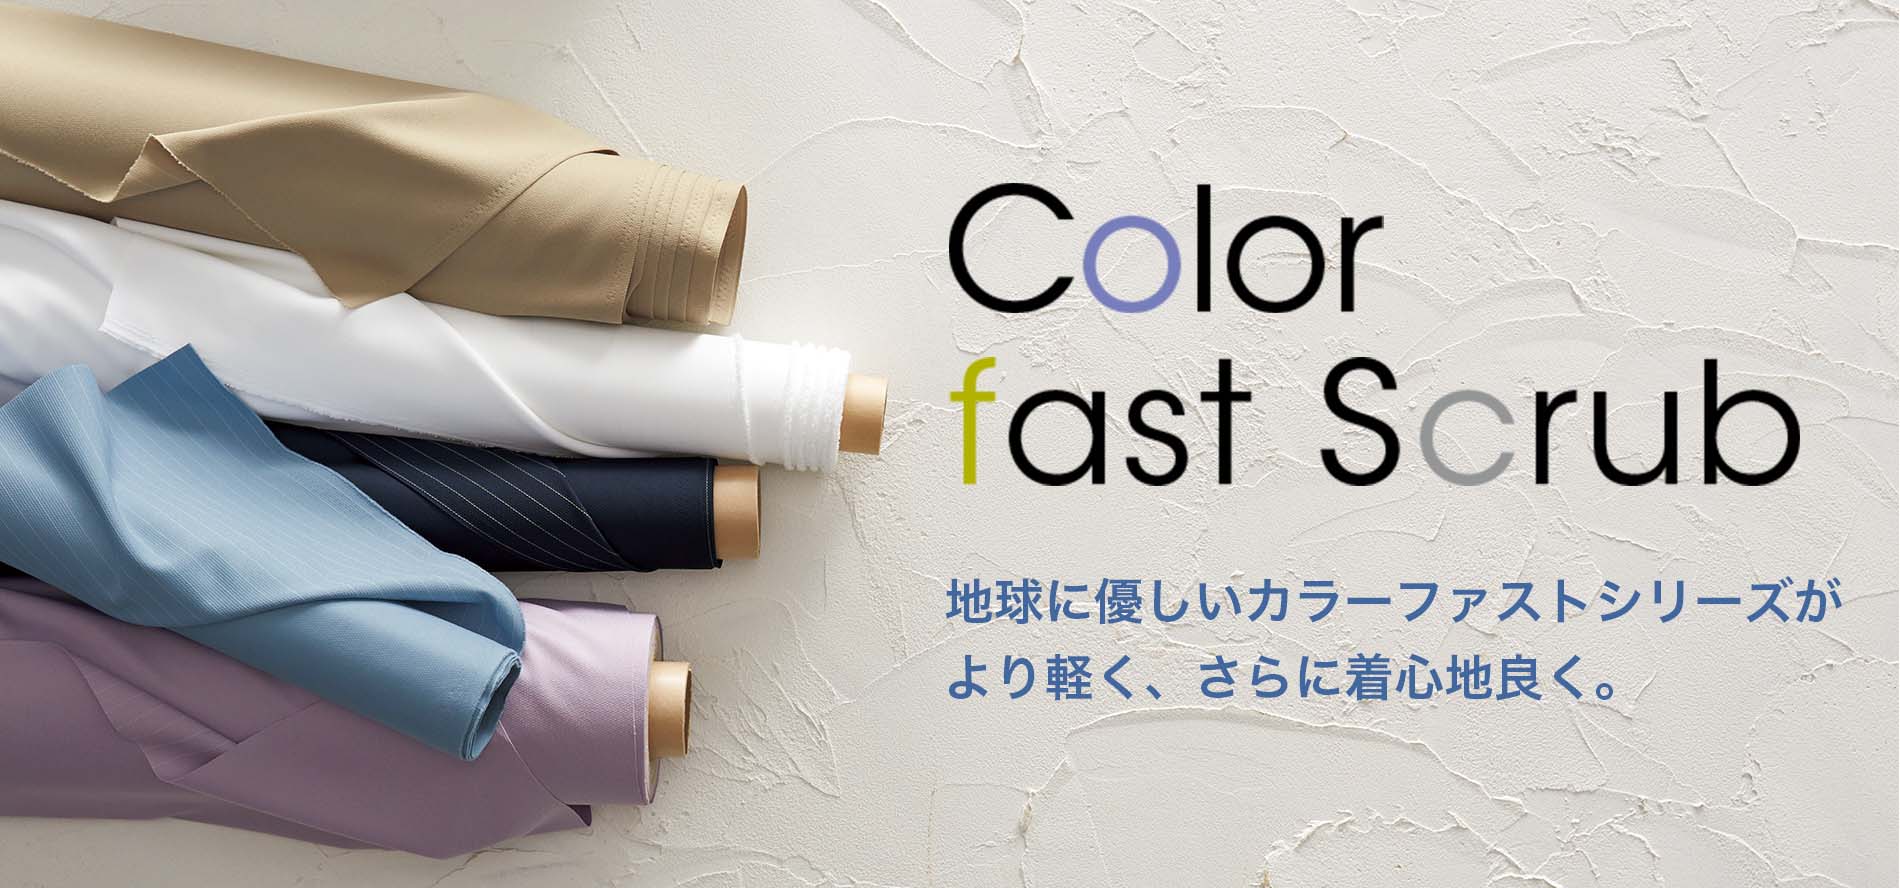 Colorfast Scrub 地球に優しいカラーファストシリーズがより軽く、さらに着心地良く。